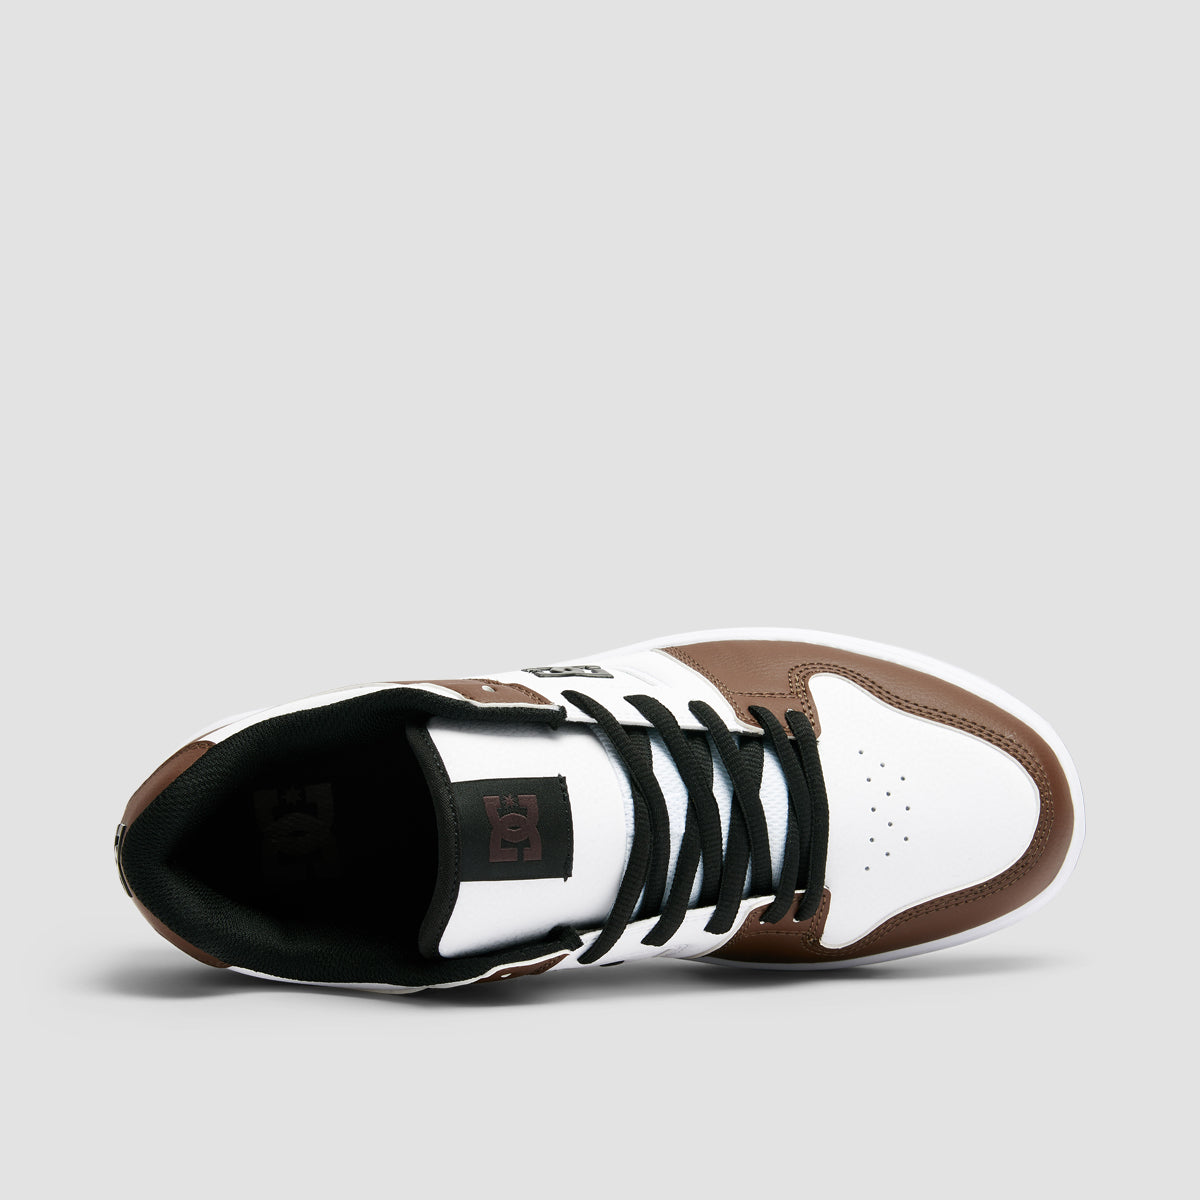 DC Manteca 4 SN Shoes - White/Brown